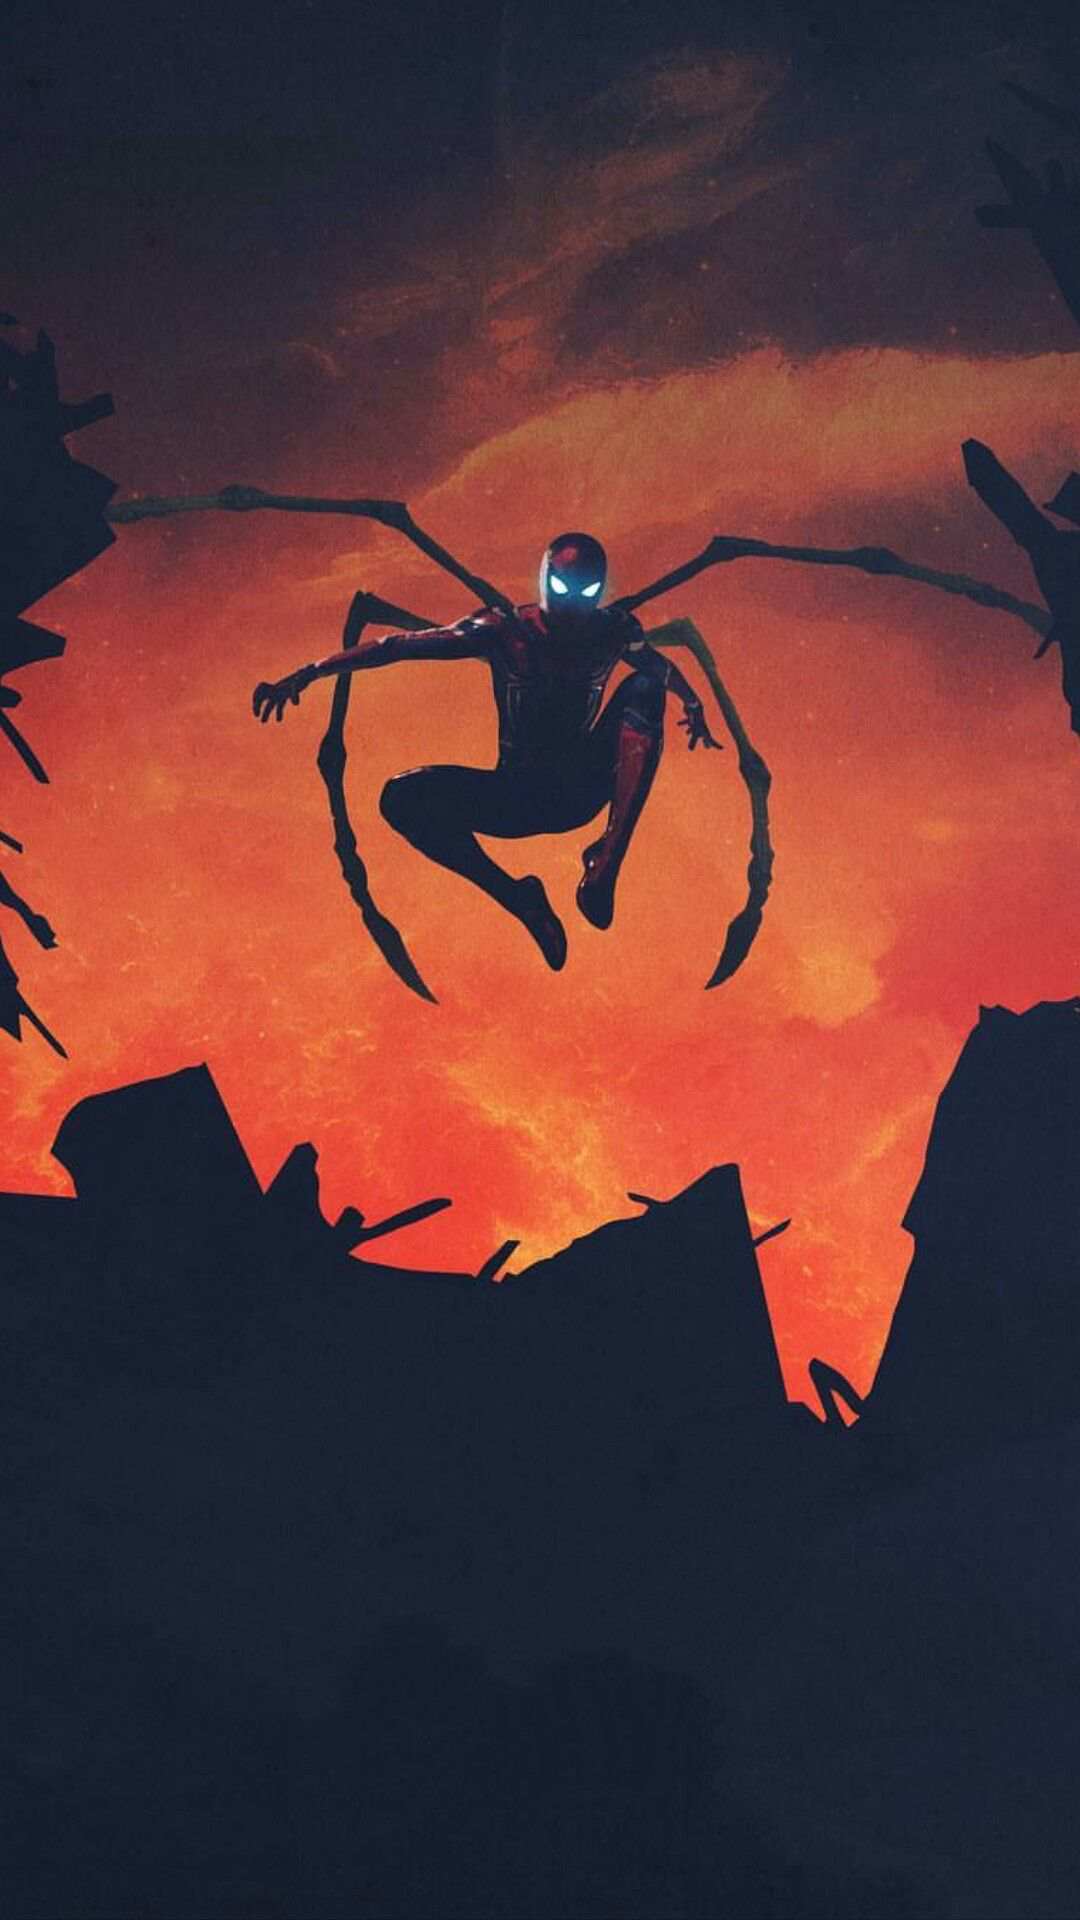 Spiderman Avengers Iron Spider Suit Wallpaper Wallpaper